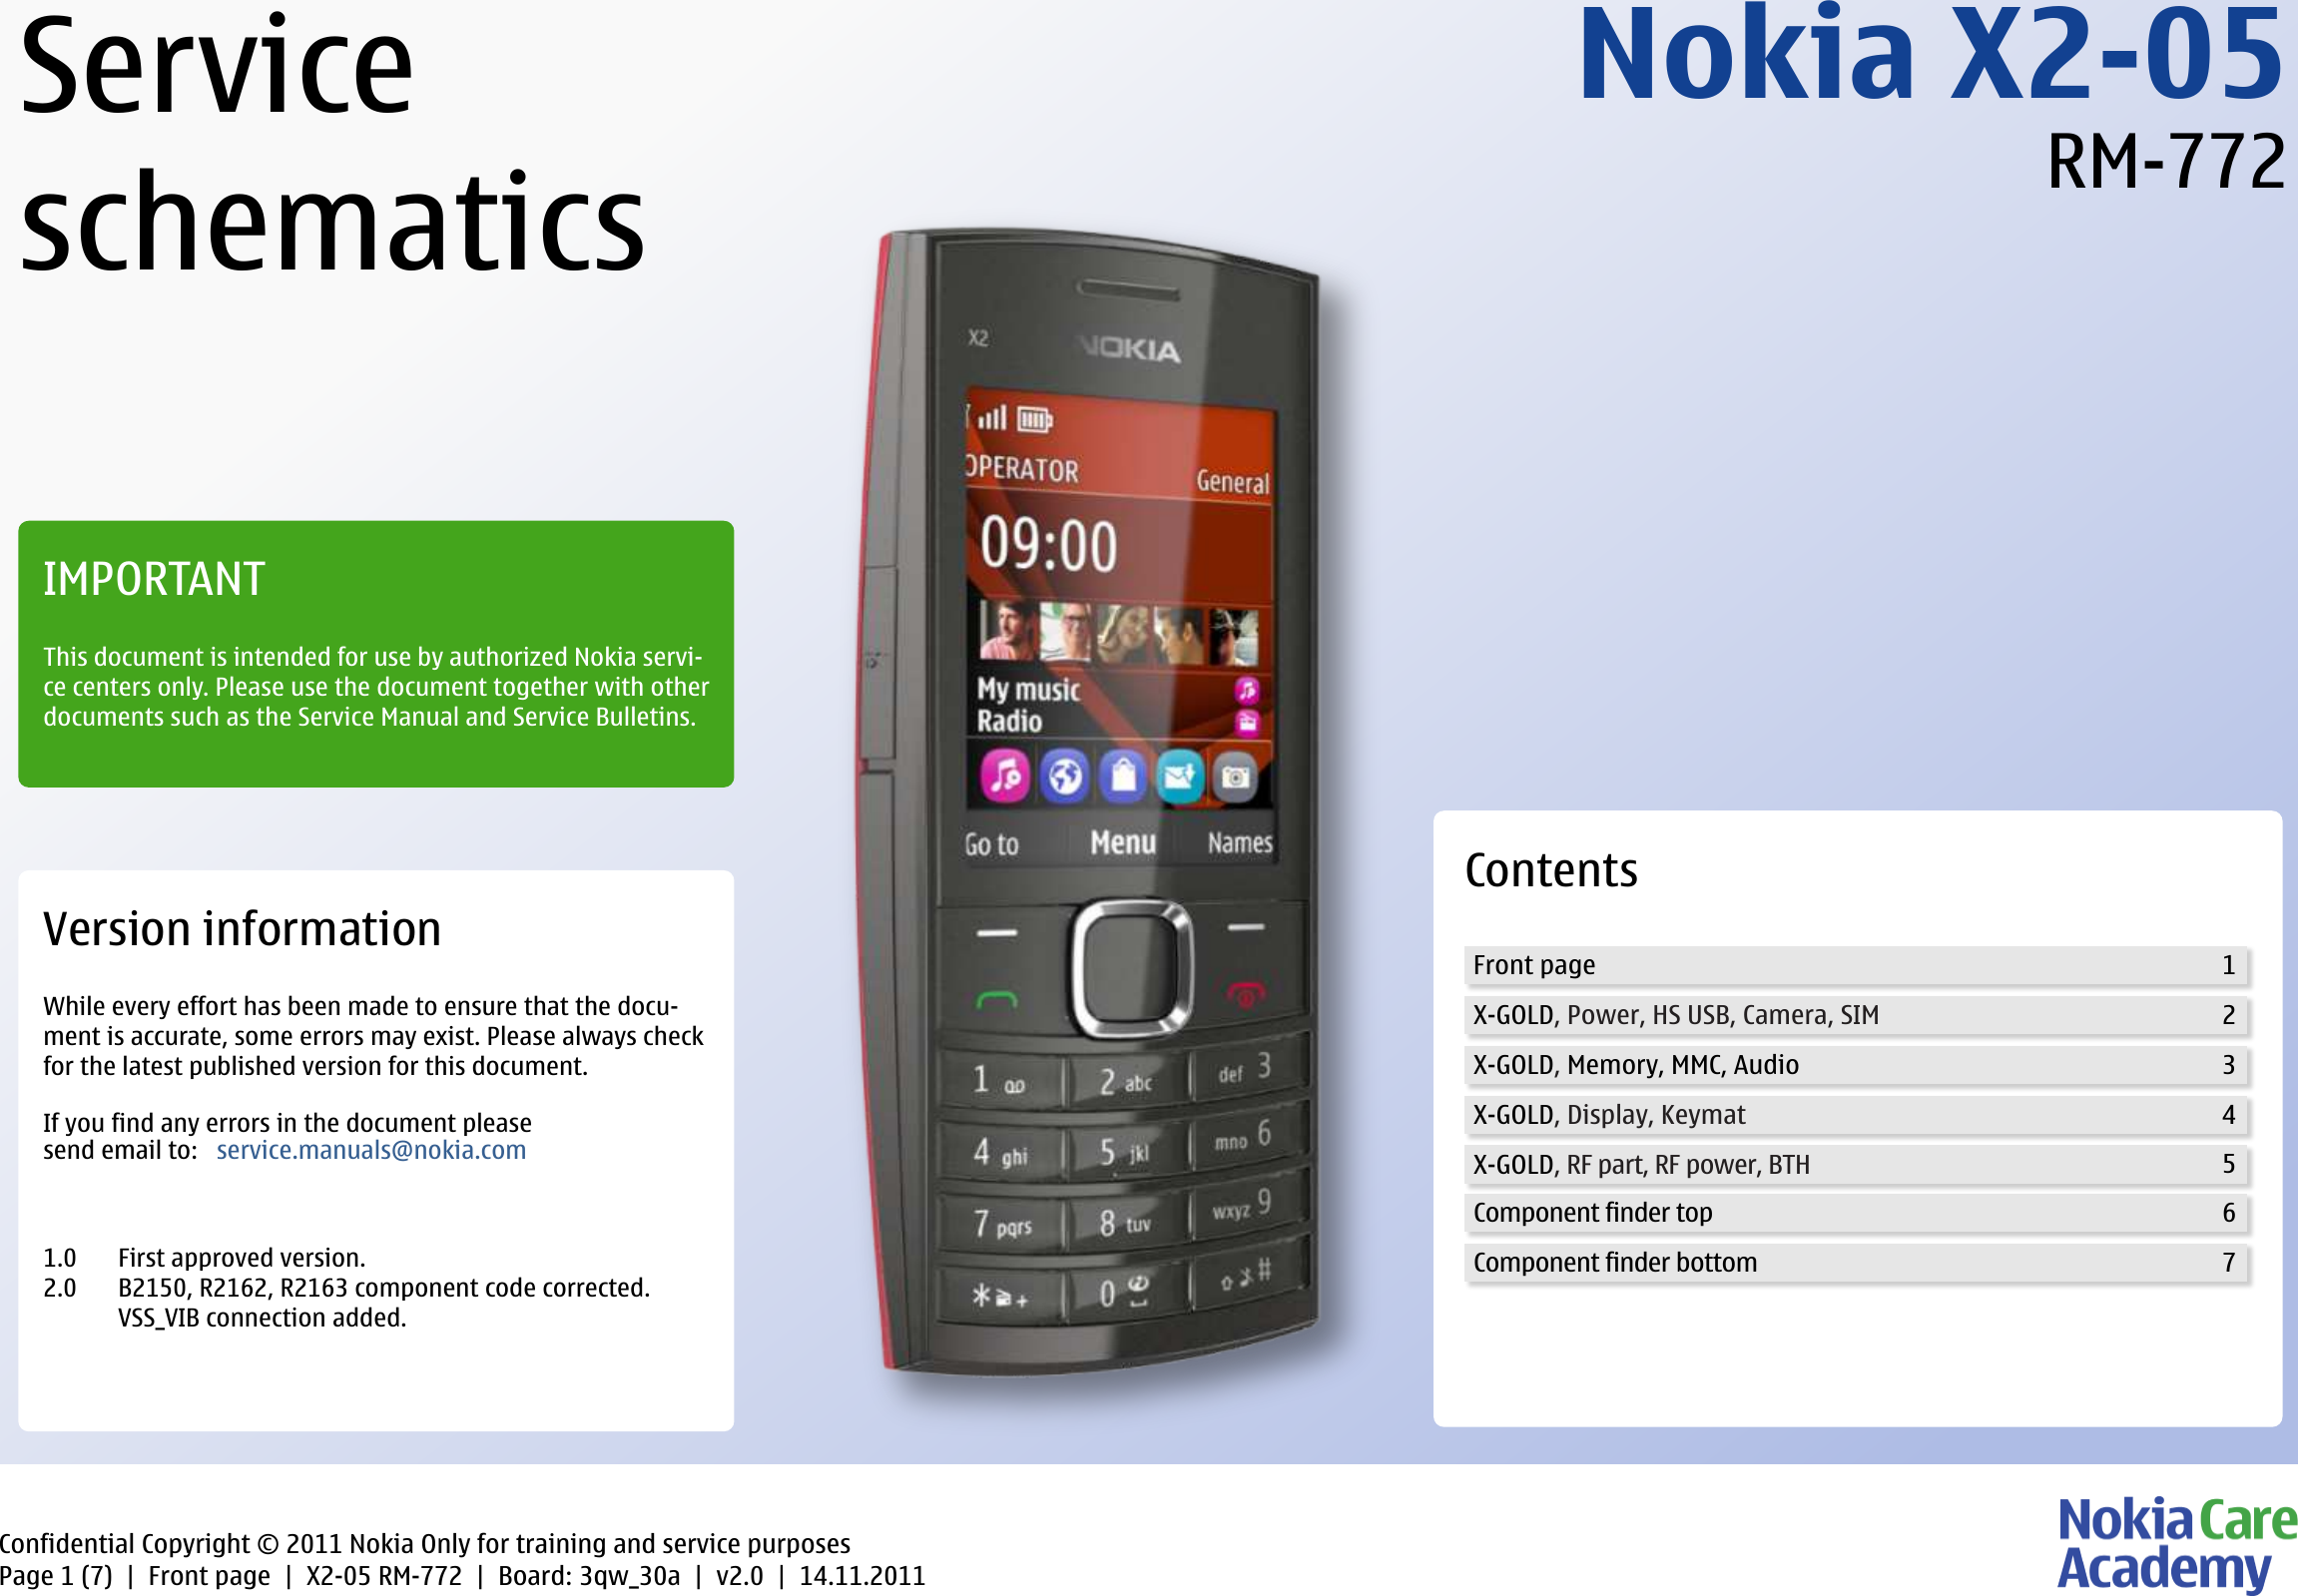 Page 1 of 8 - Nokia X2-05 RM-772 - Service Schematics. Www.s-manuals.com. Schematics V2.0